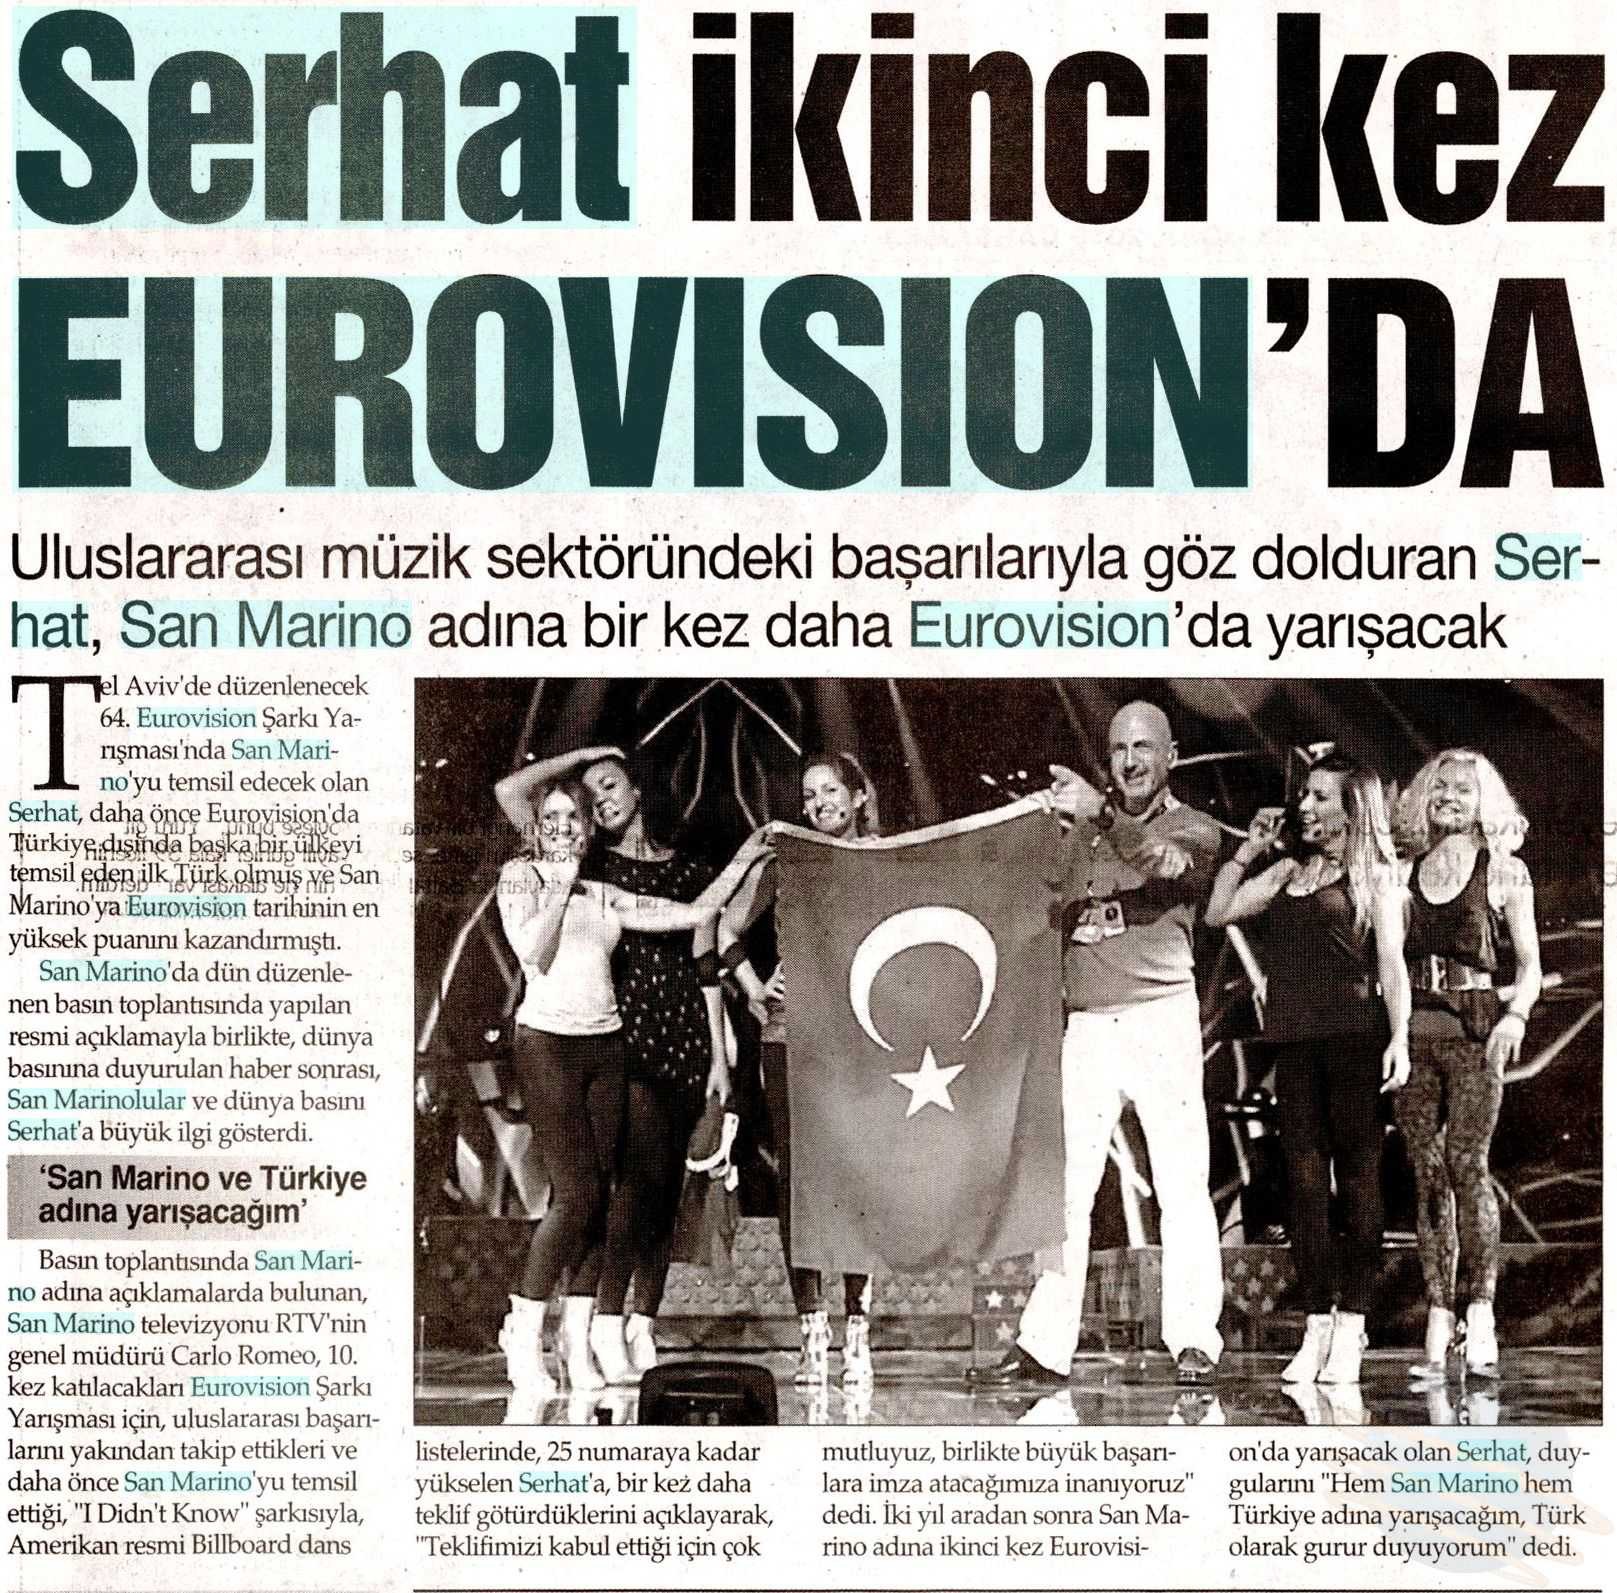 Serhat ikinci kez Eurovision'da - 23.01.2019 - İstanbul Gazetesi